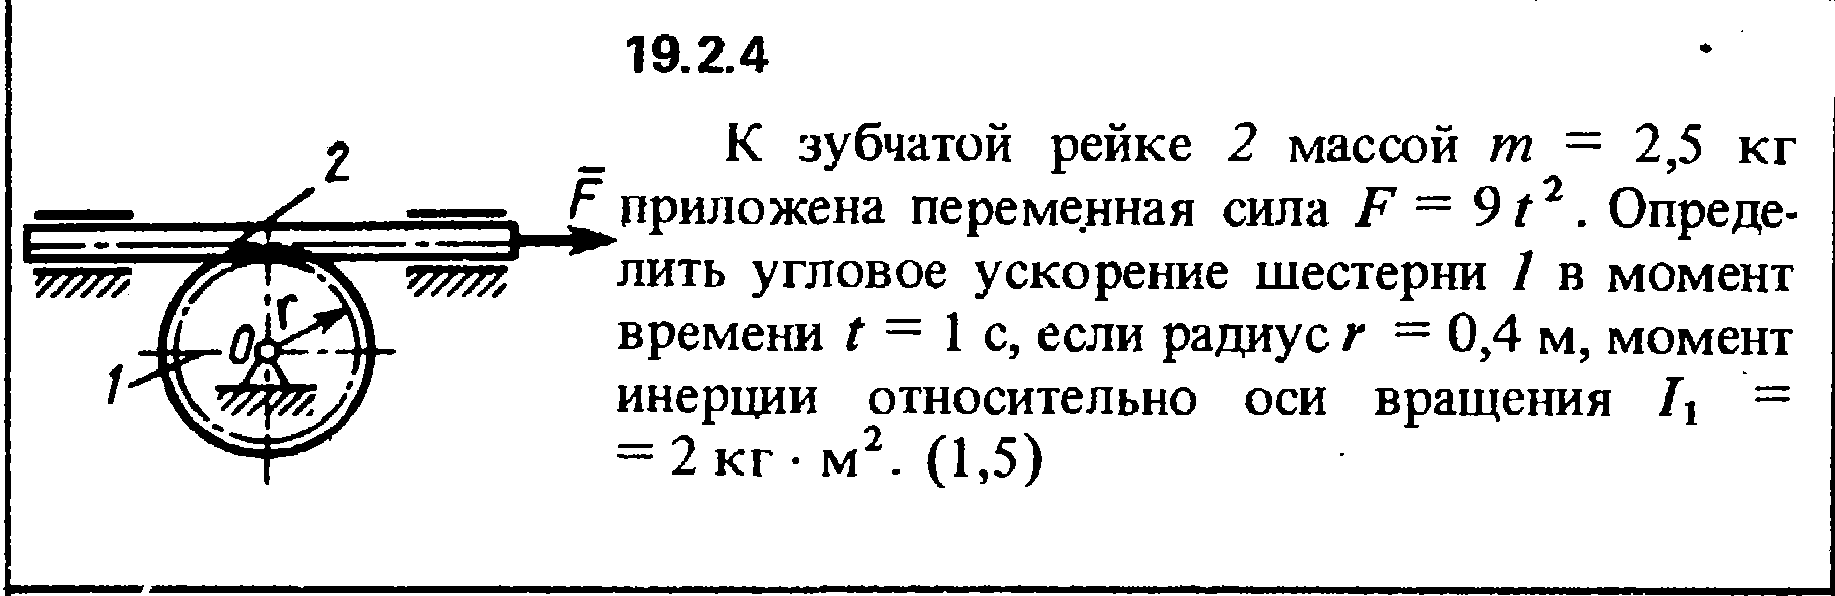 Решение 19.2.4 из сборника (решебника) Кепе О.Е. 1989